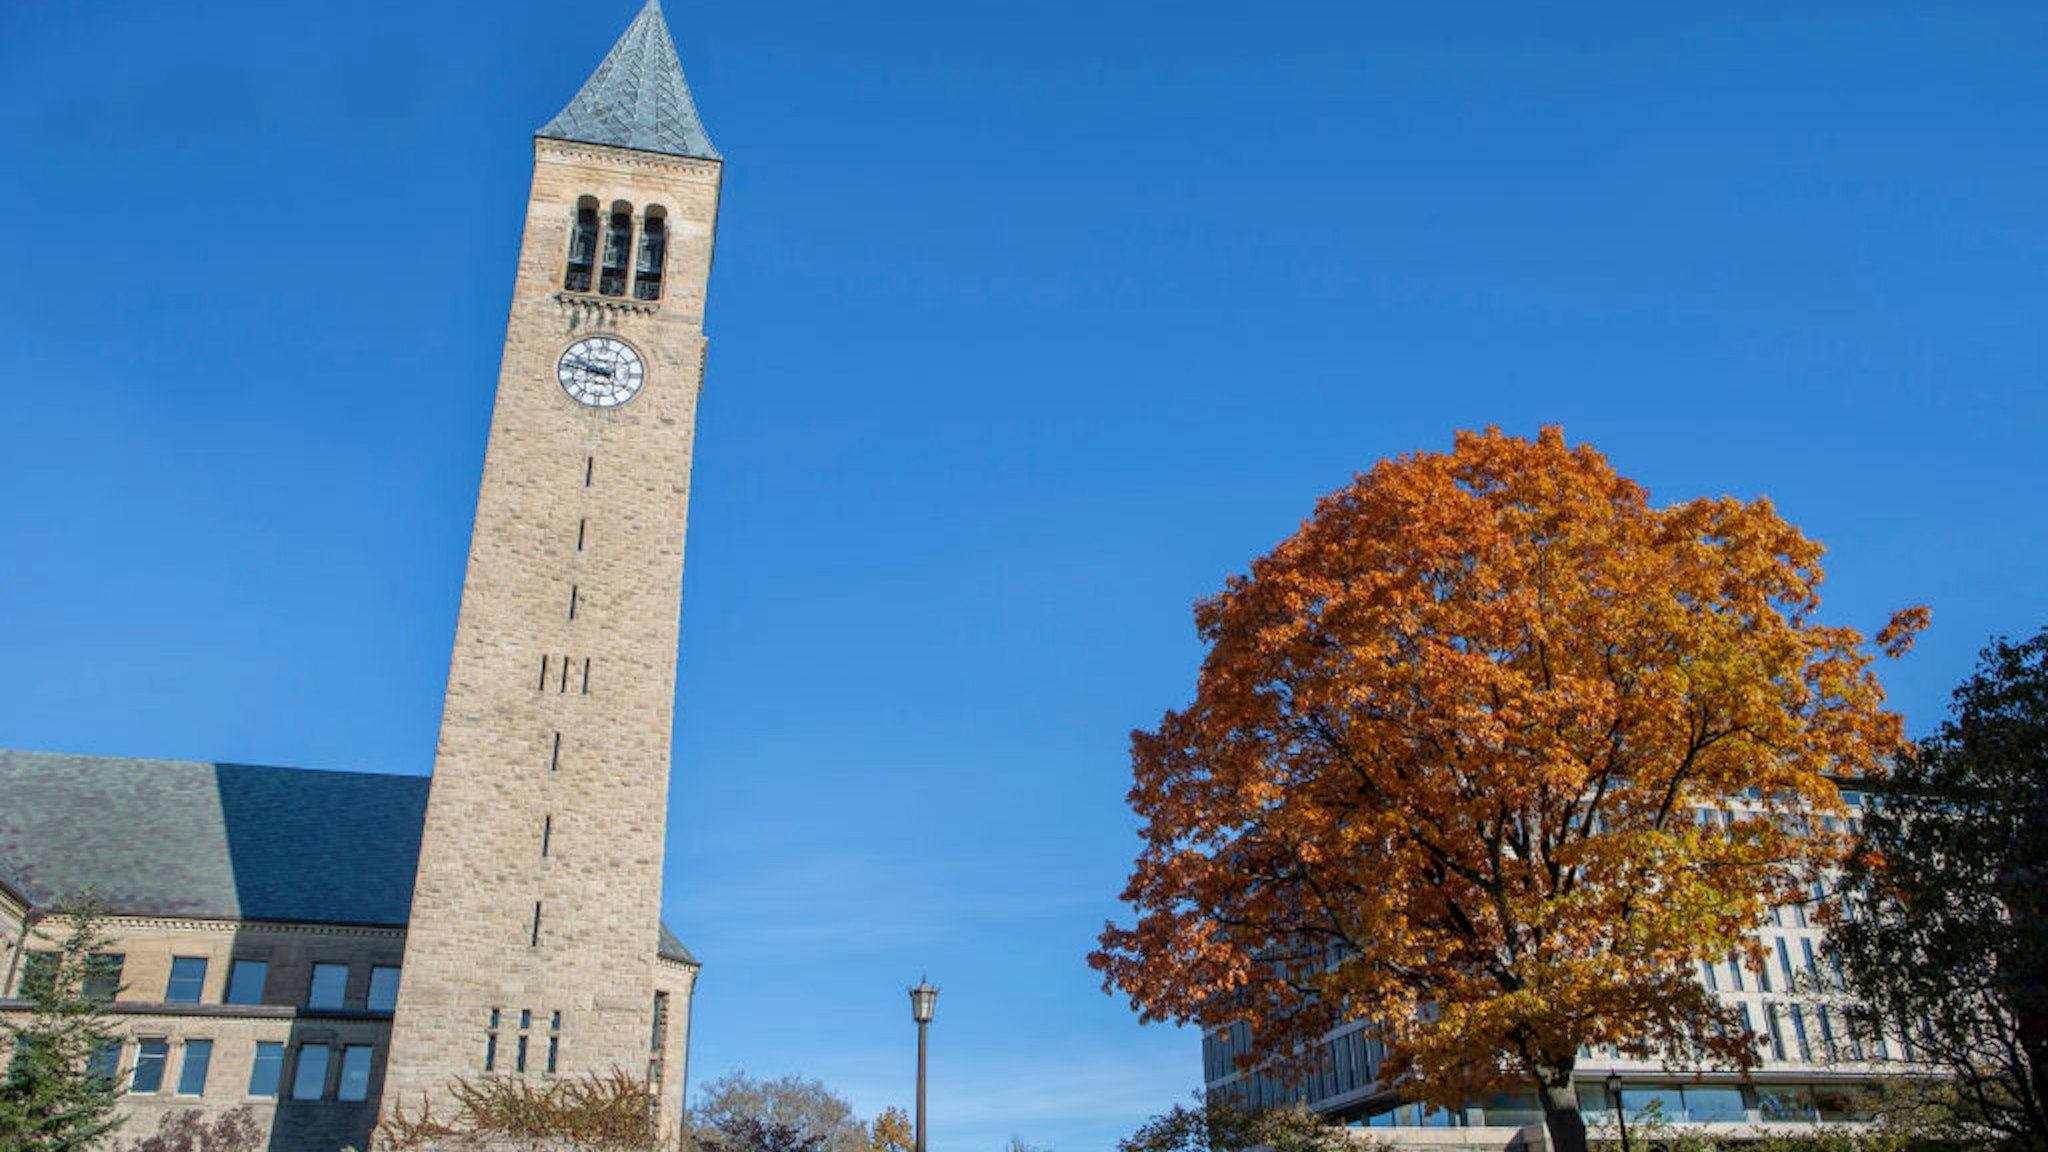 McGraw Tower, Cornell University, Ithaca, New York, USA .